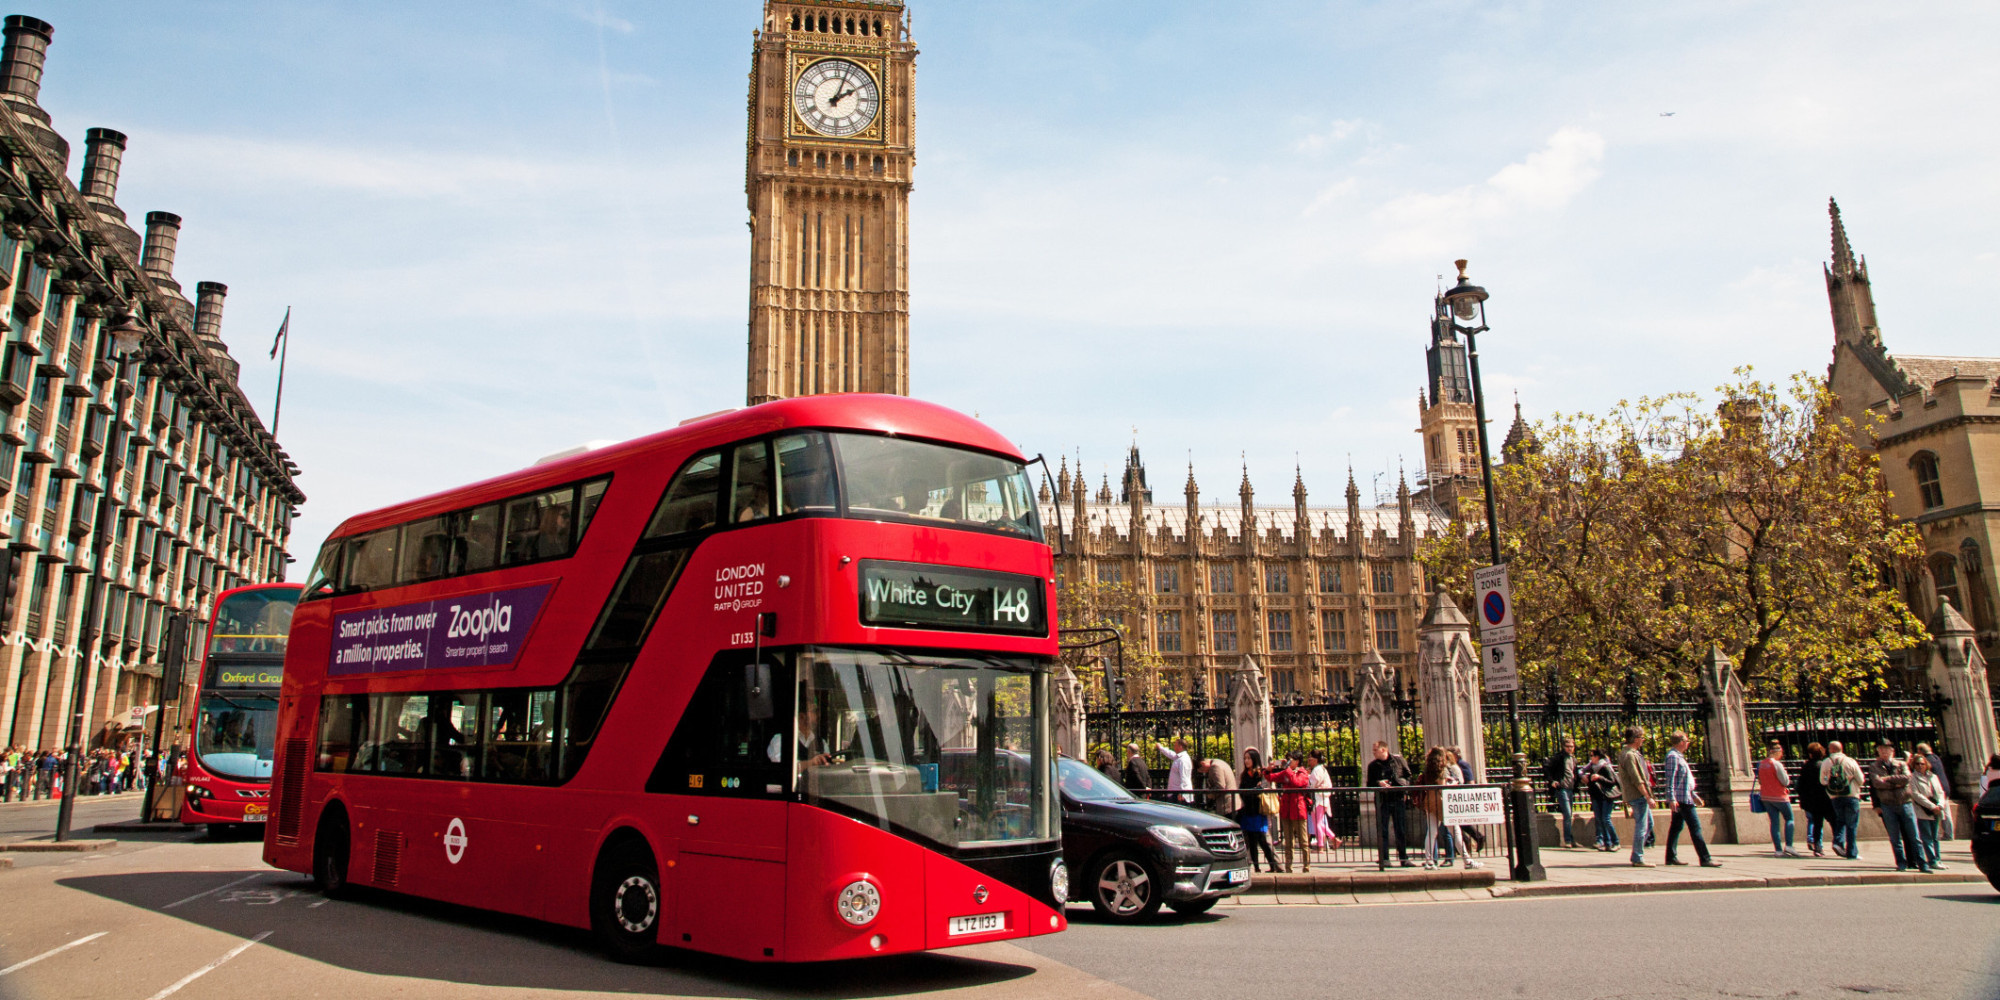 London Red Double Decker Bus